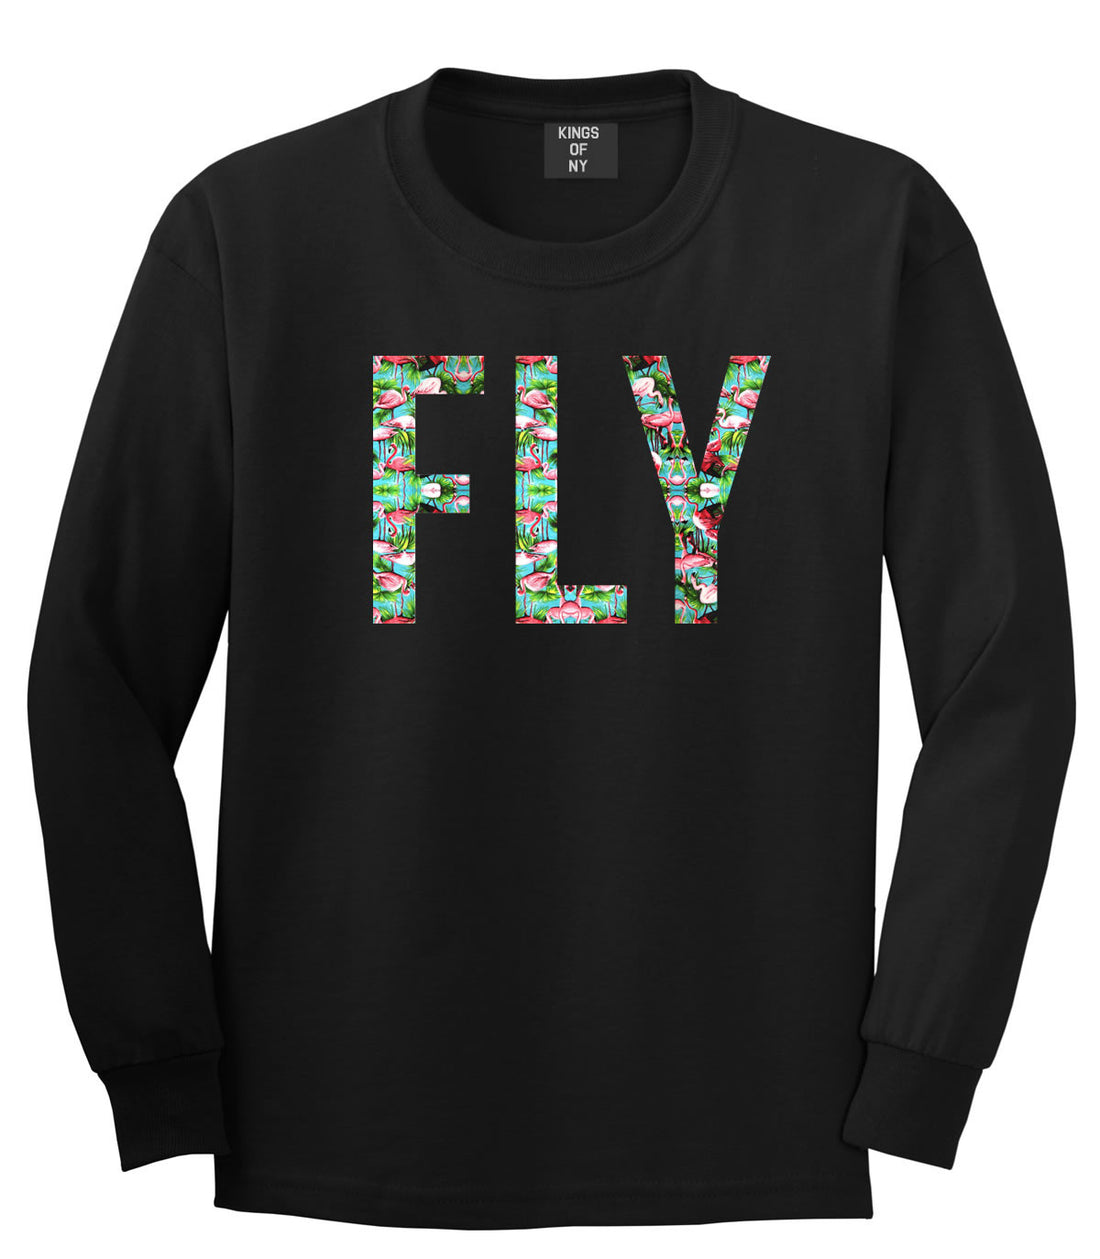 FLY Flamingo Print Summer Wild Society Long Sleeve Boys Kids T-Shirt In Black by Kings Of NY